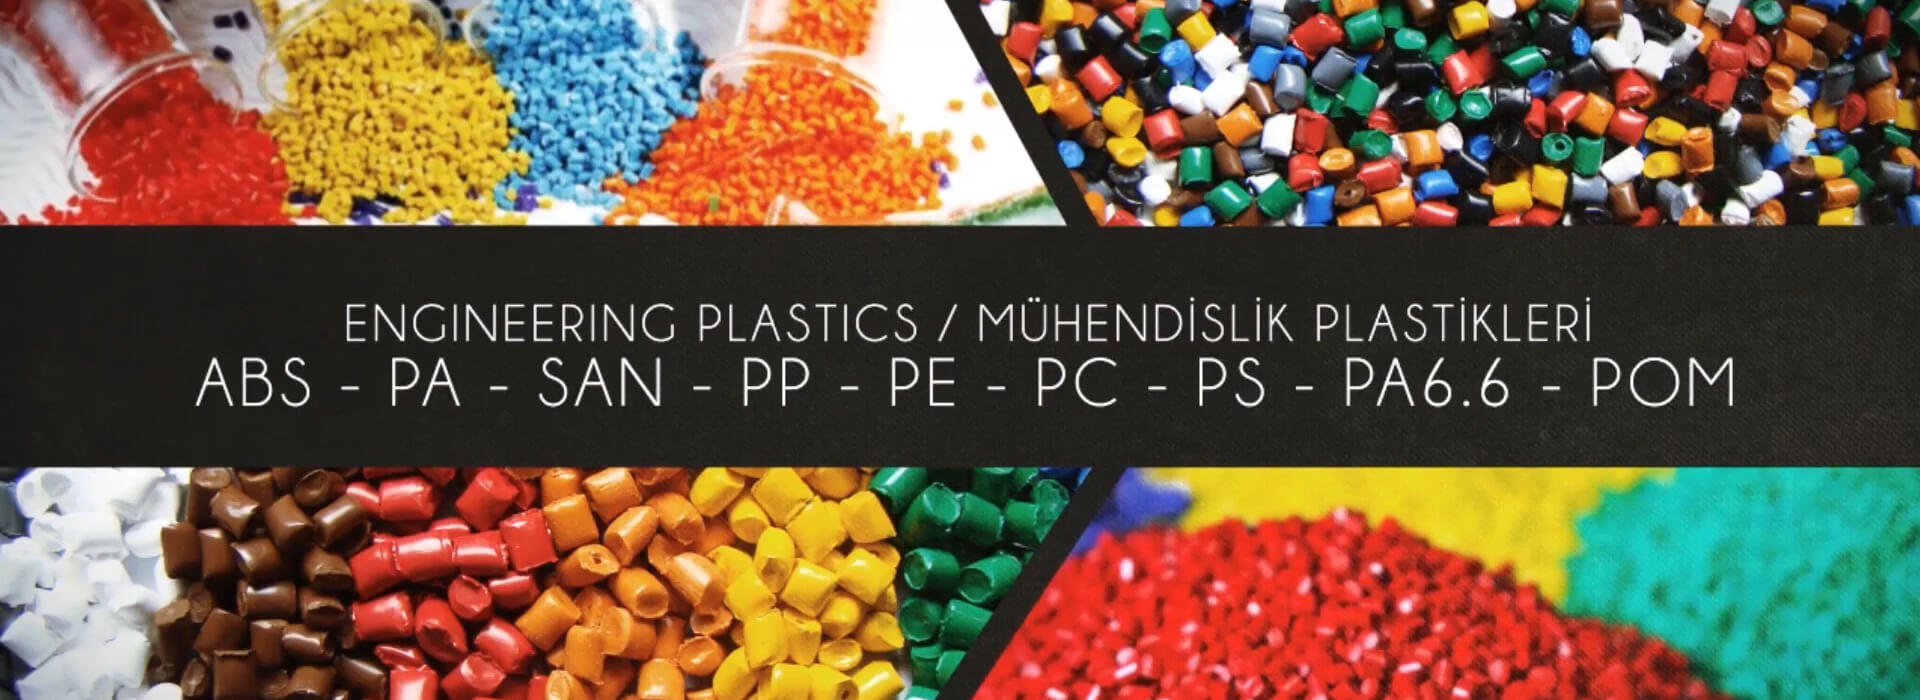 Engineering Plastics - ABS, PA, SAN, PP, PE, PC, PS, PA6.6, POM